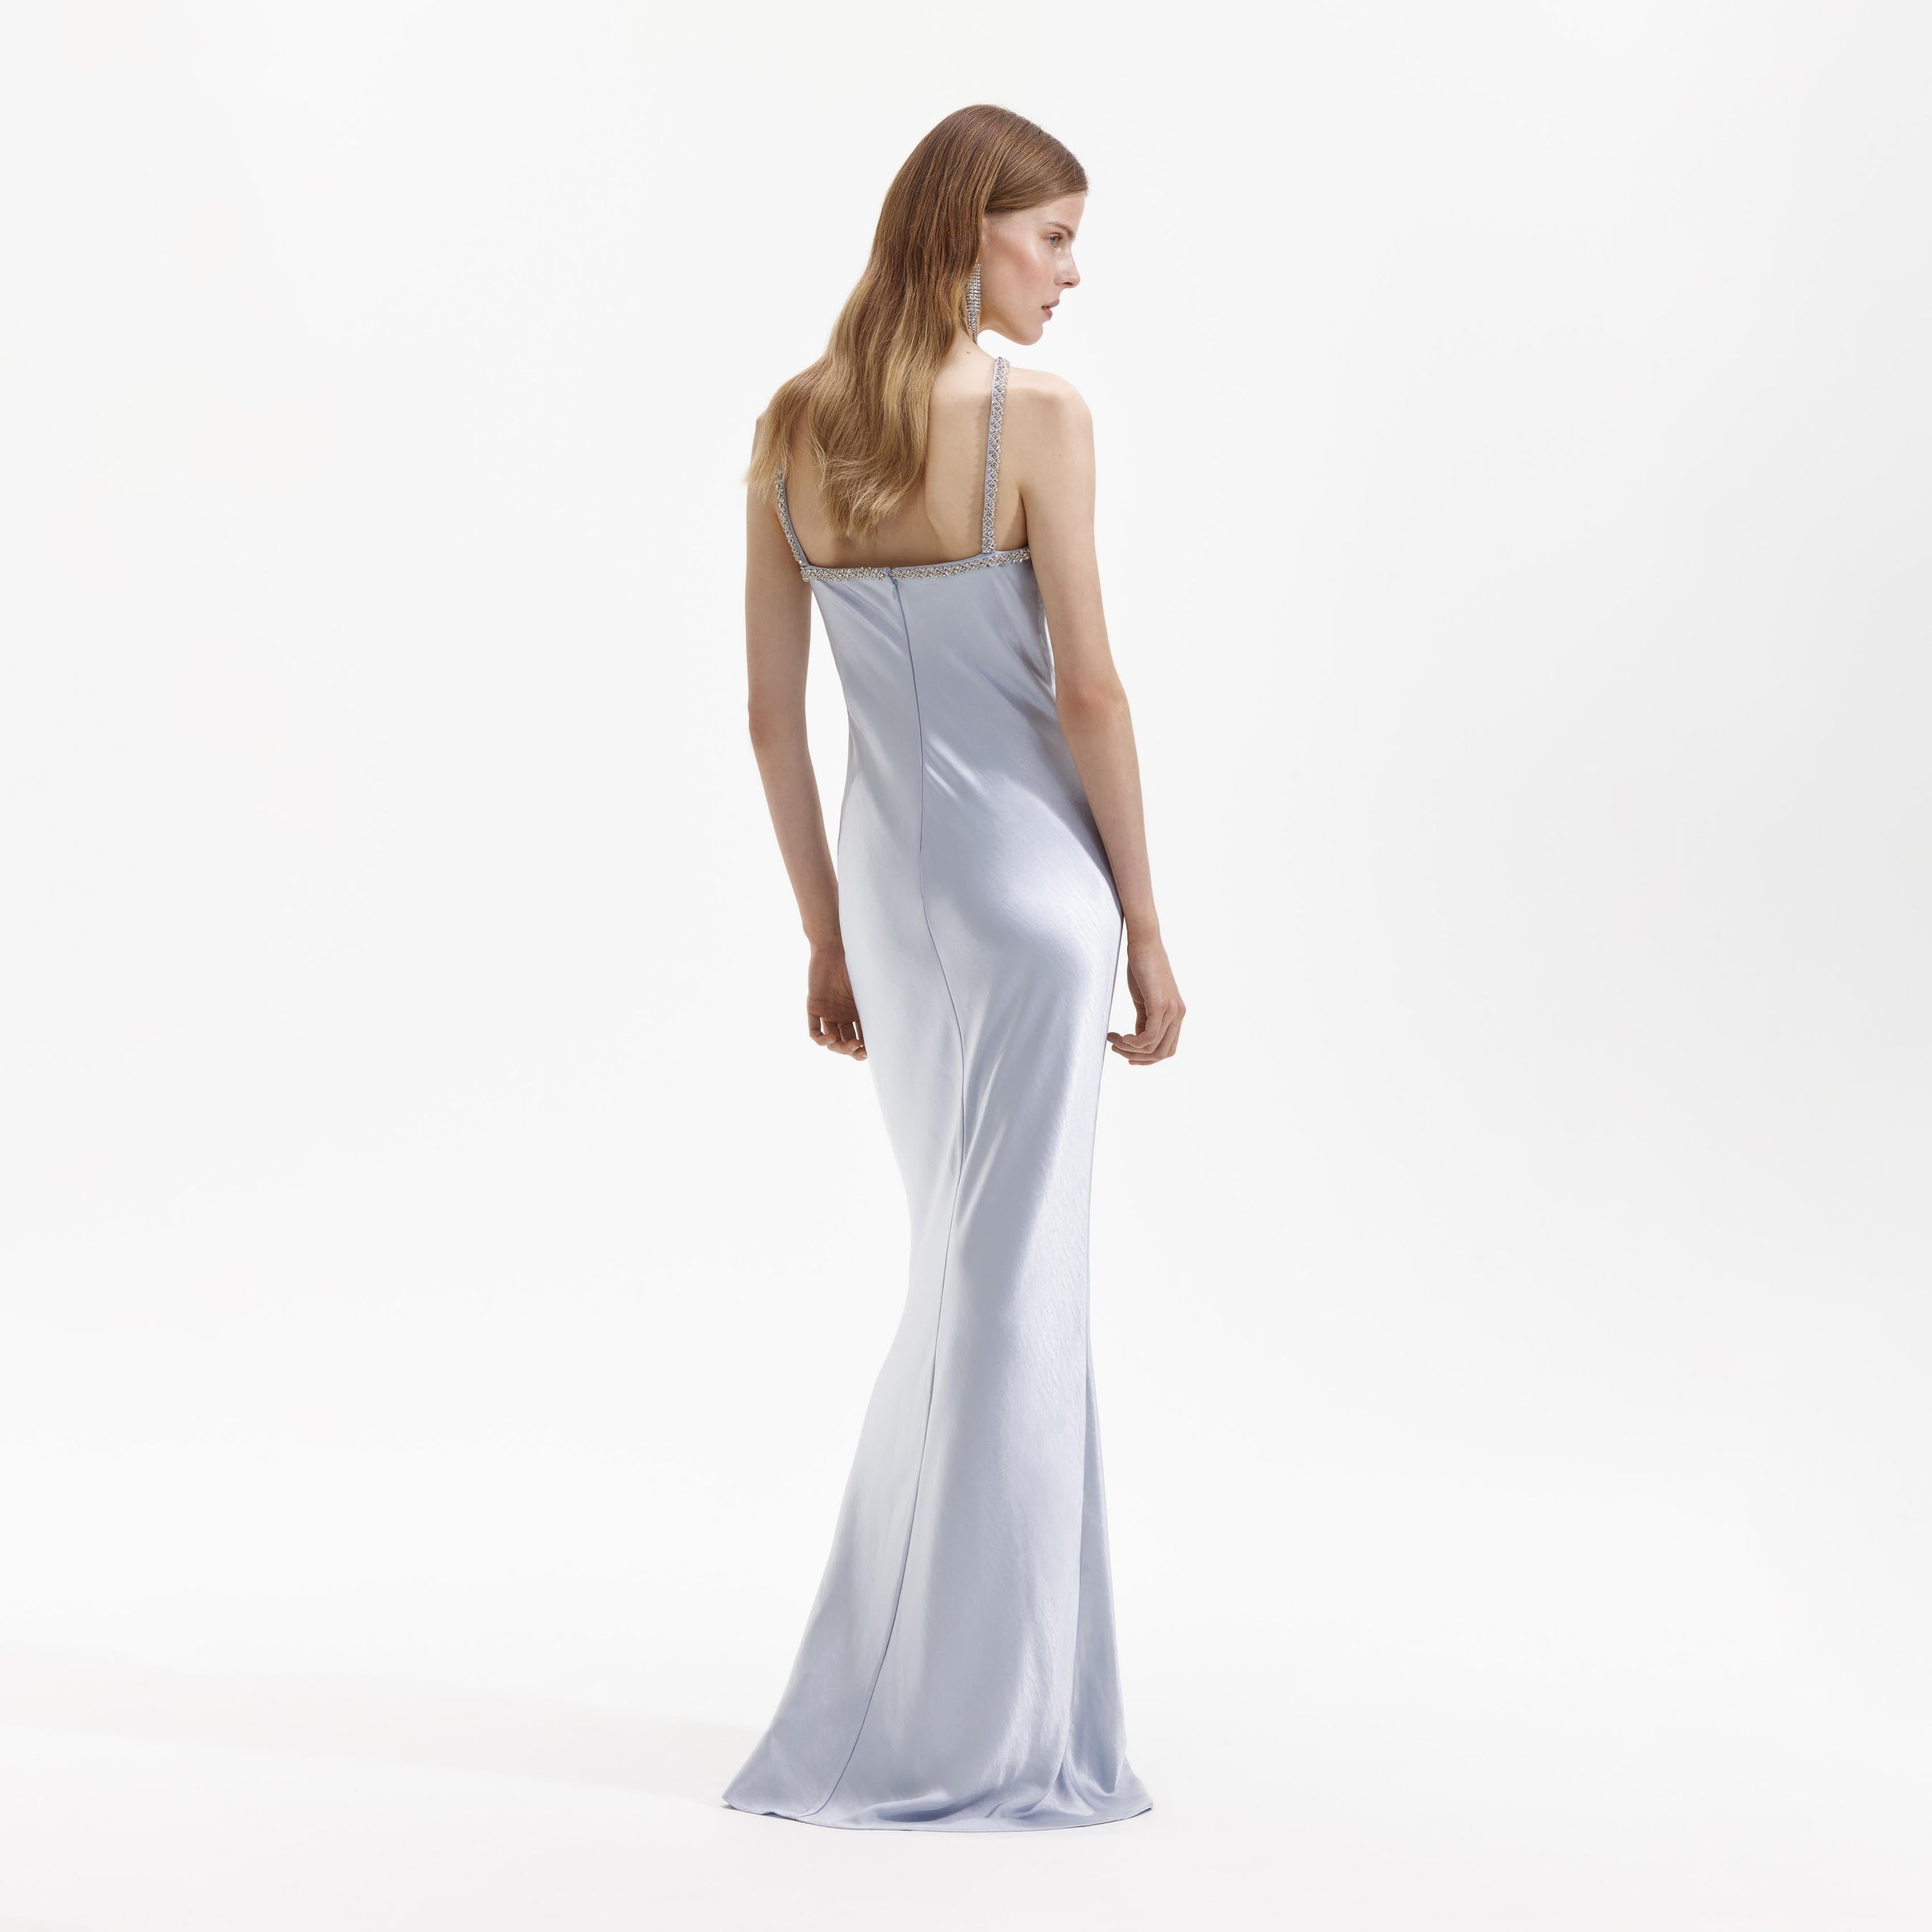 Blue Satin Diamante Maxi Dress